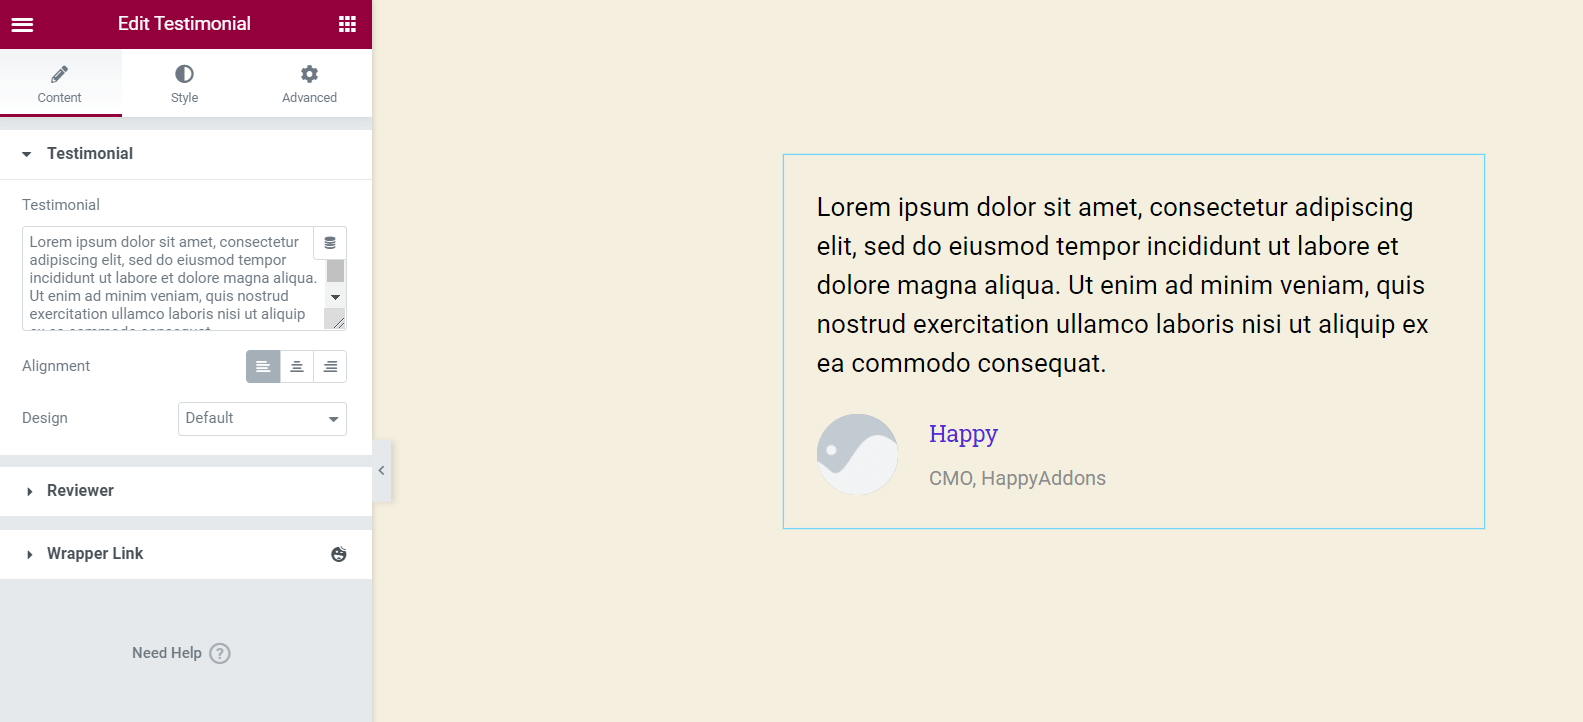 happyaddons-testimonial-widget